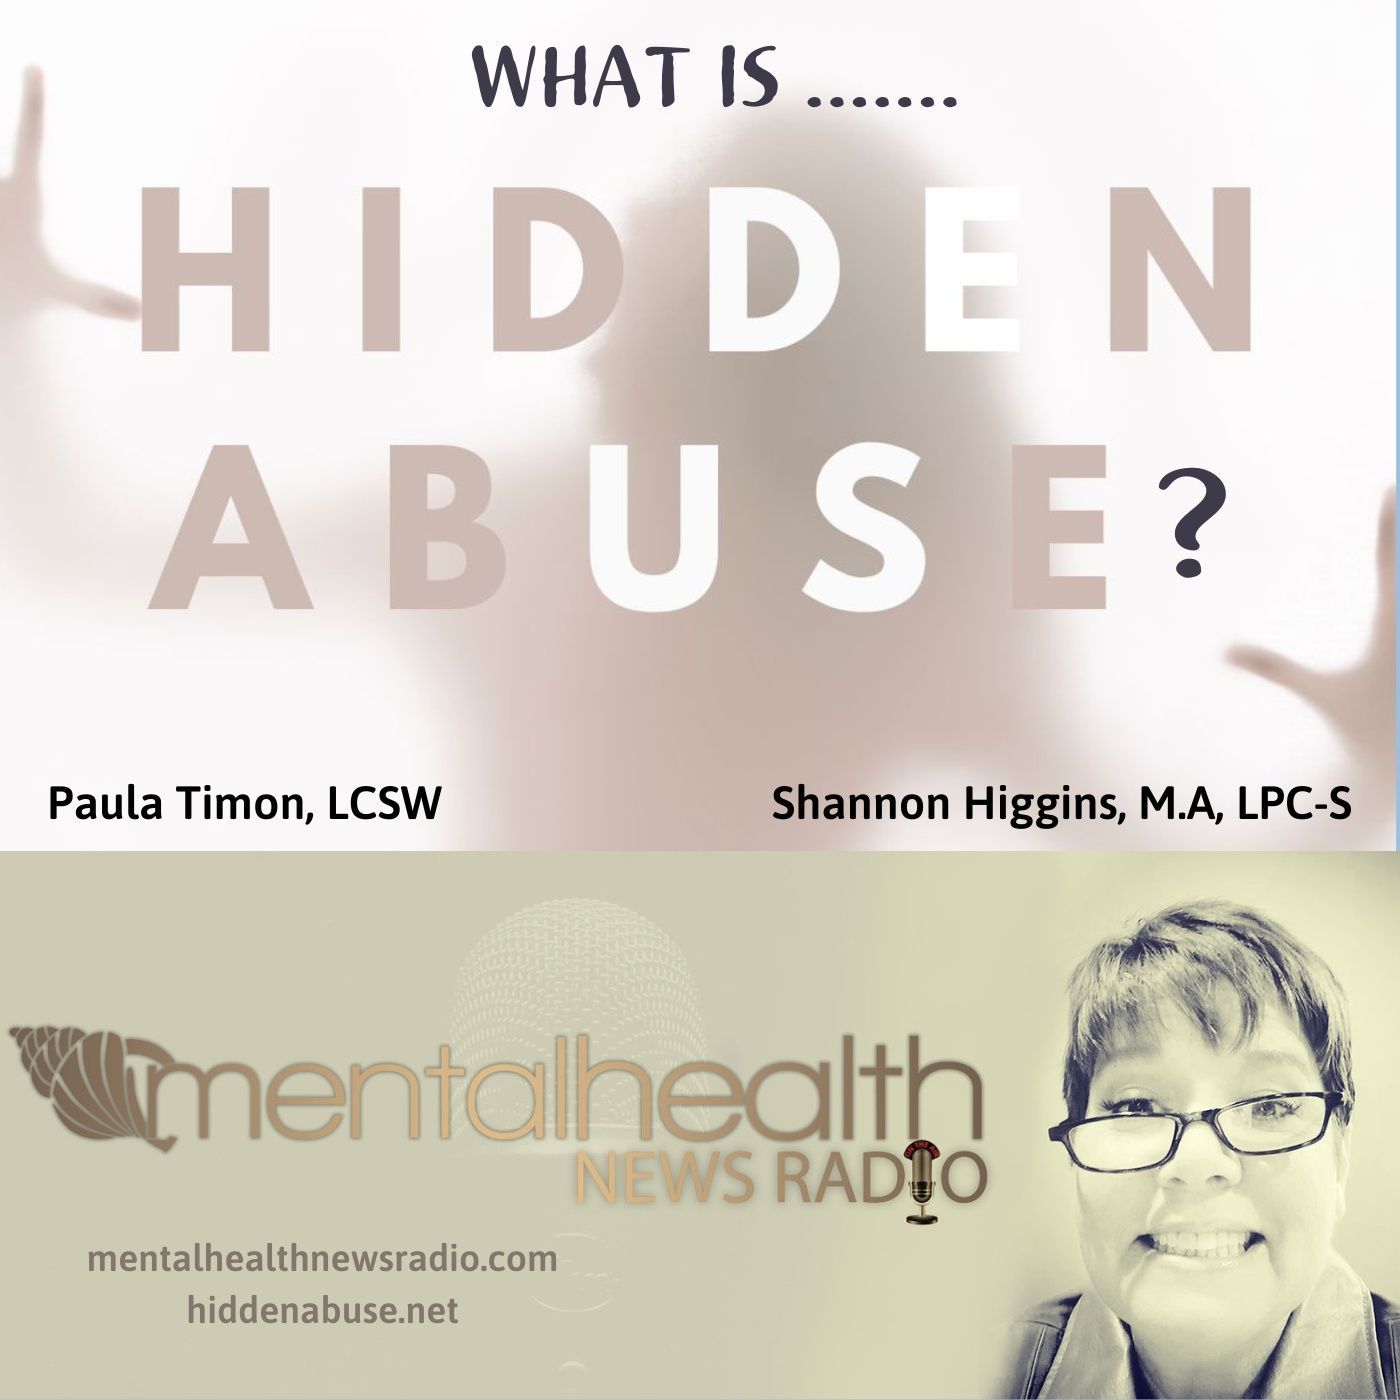 Mental Health News Radio - What is Hidden Abuse?